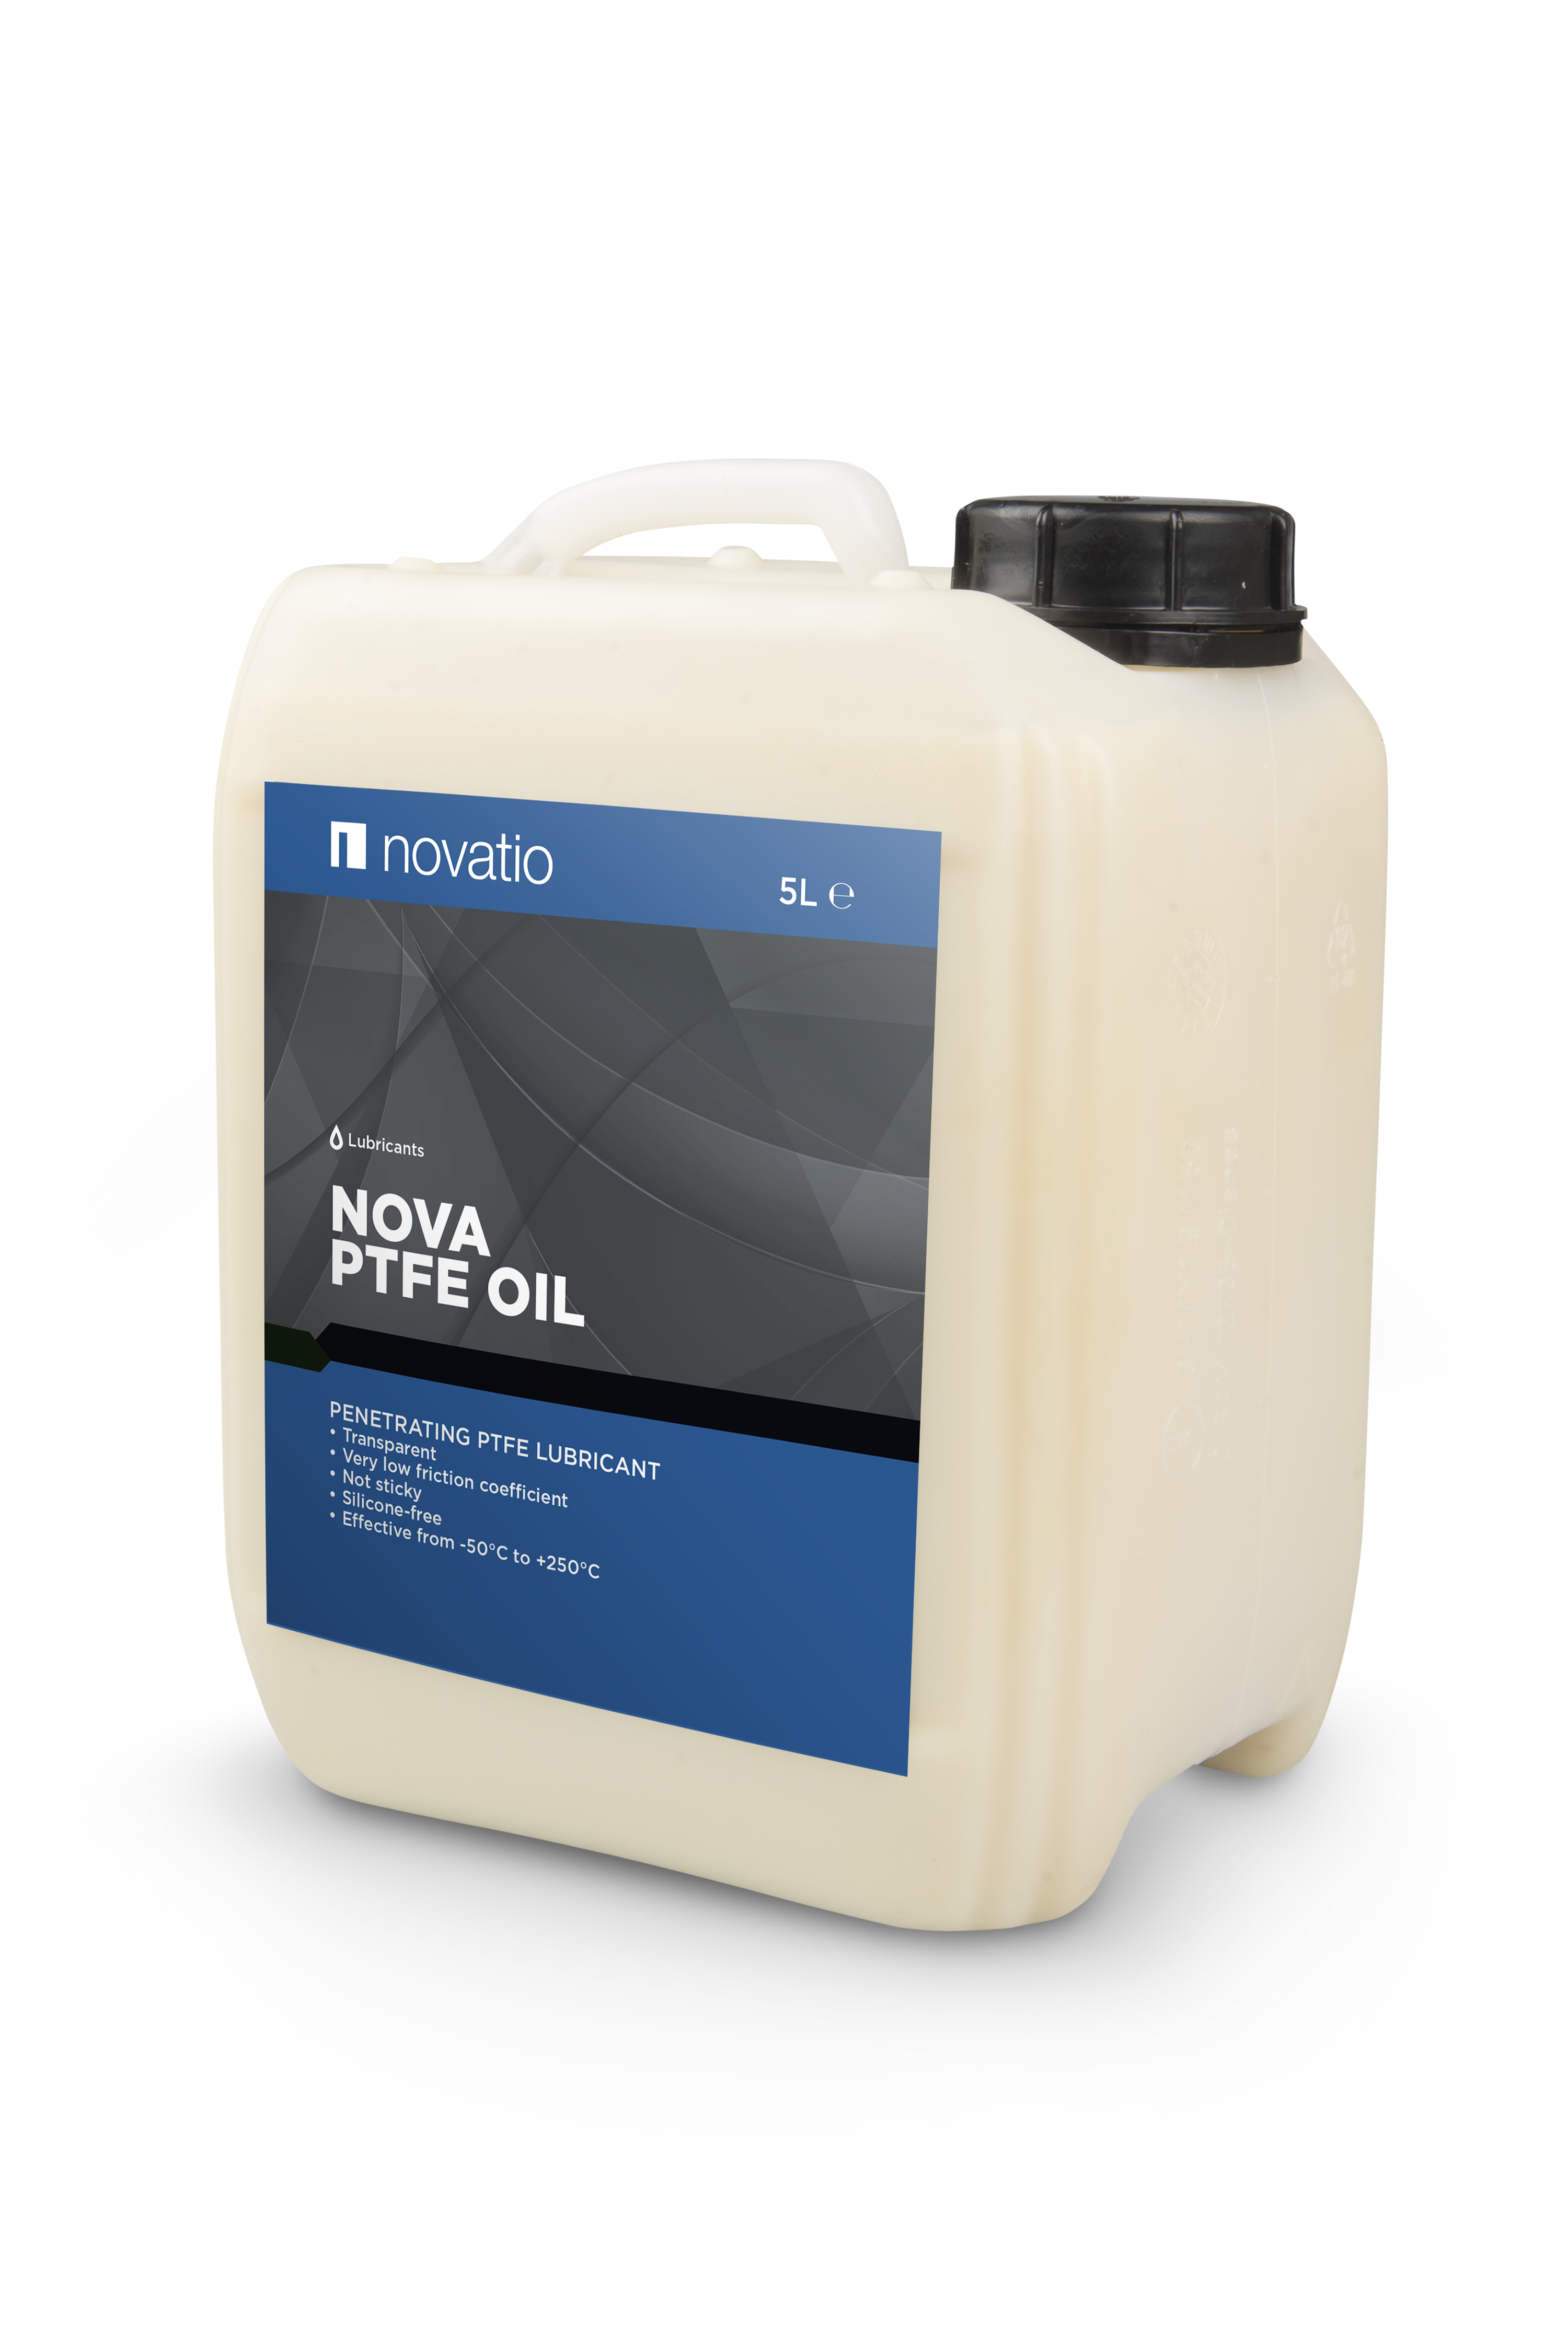 Nova PTFE Oil